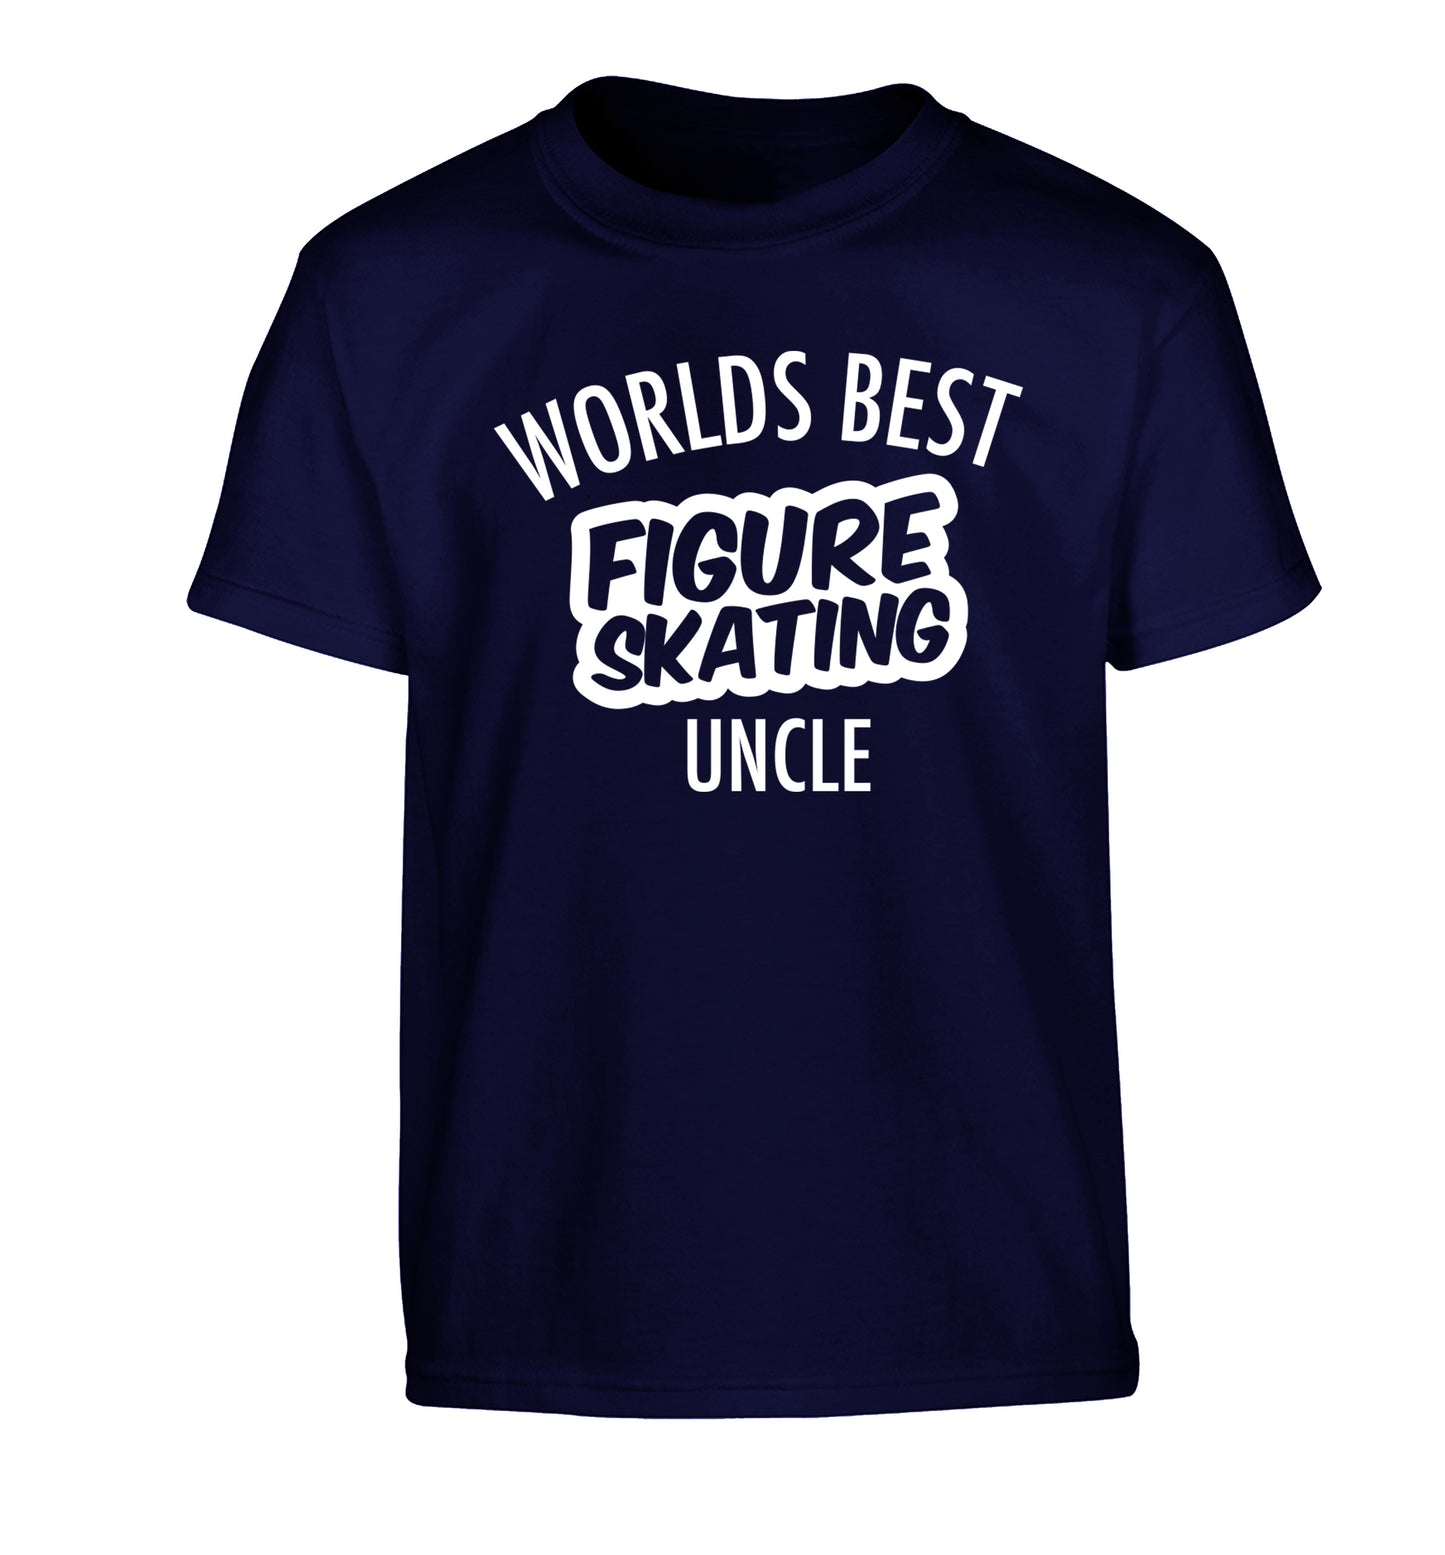 Worlds best figure skating uncle Children's navy Tshirt 12-14 Years